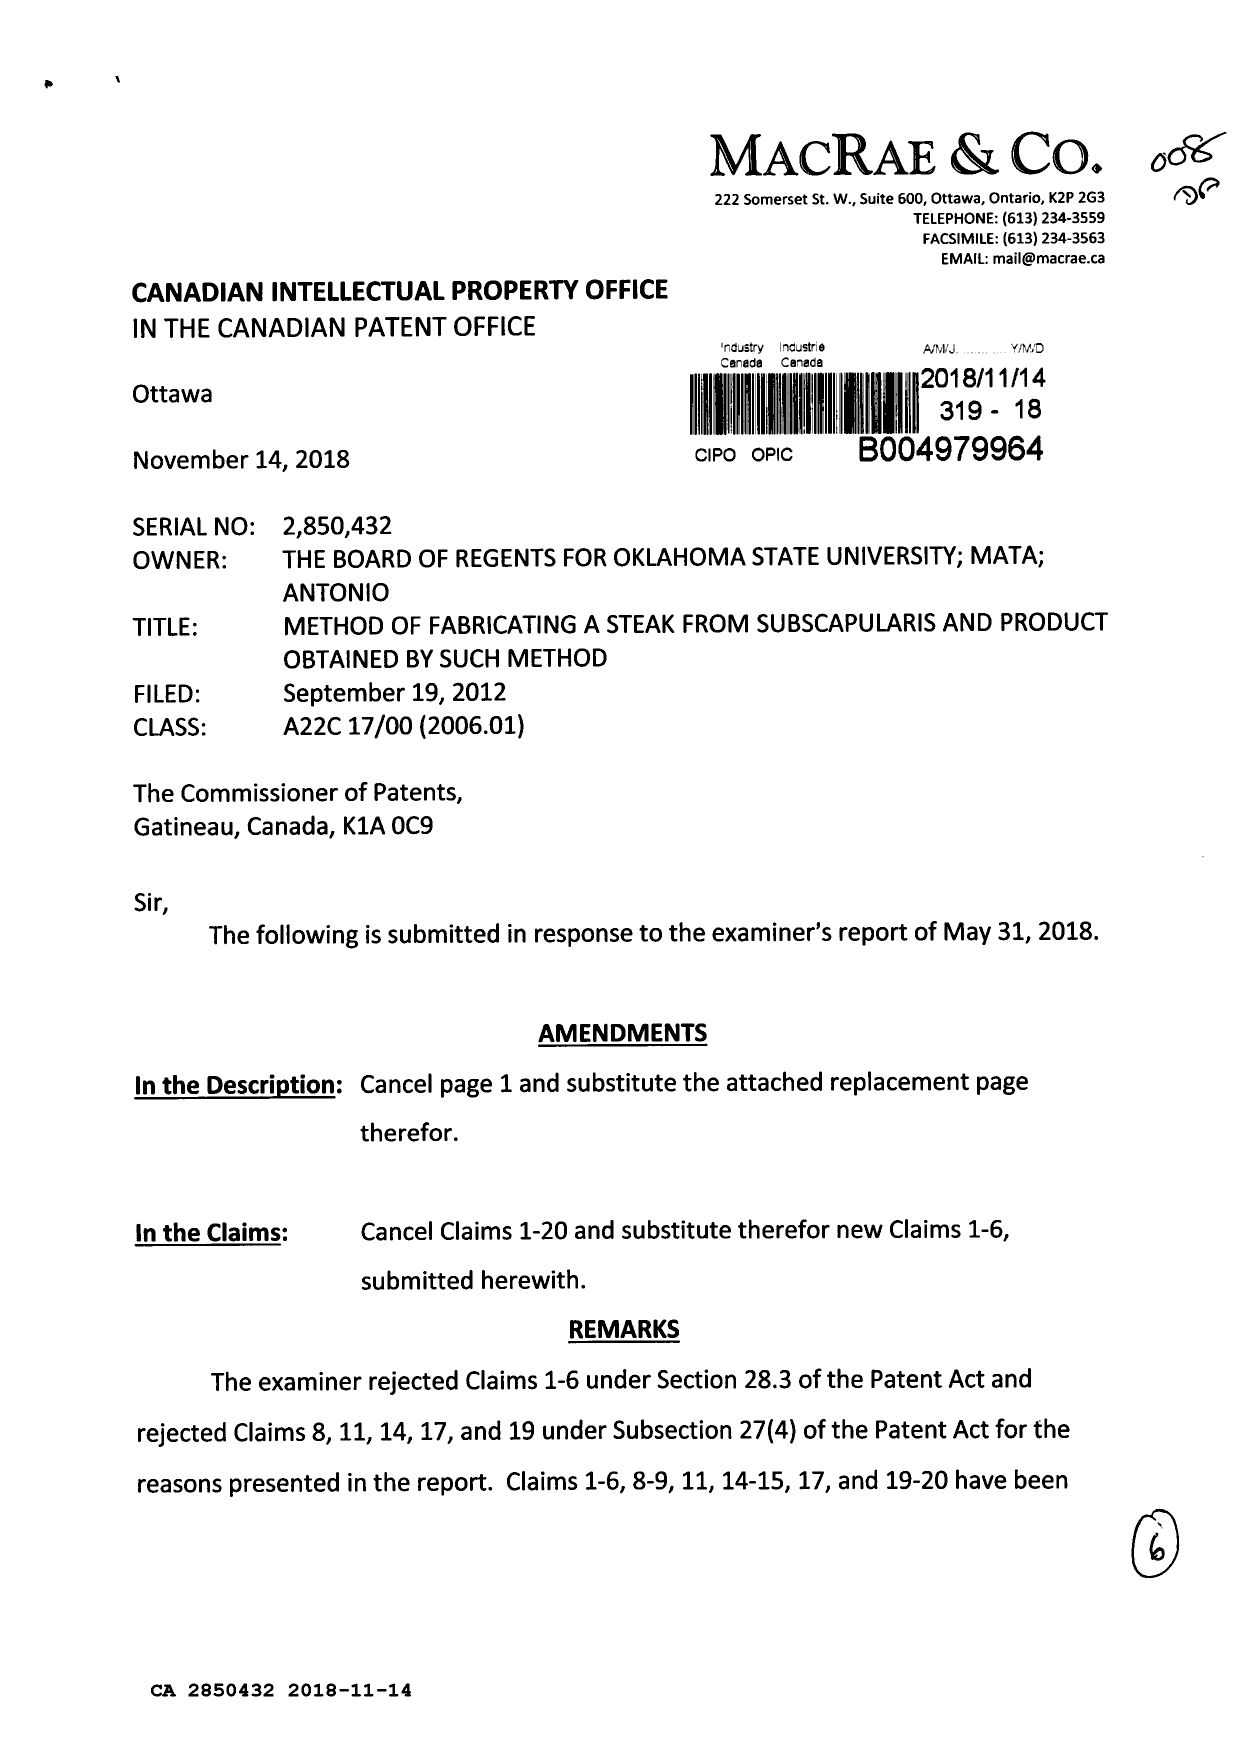 Canadian Patent Document 2850432. Amendment 20181114. Image 1 of 6